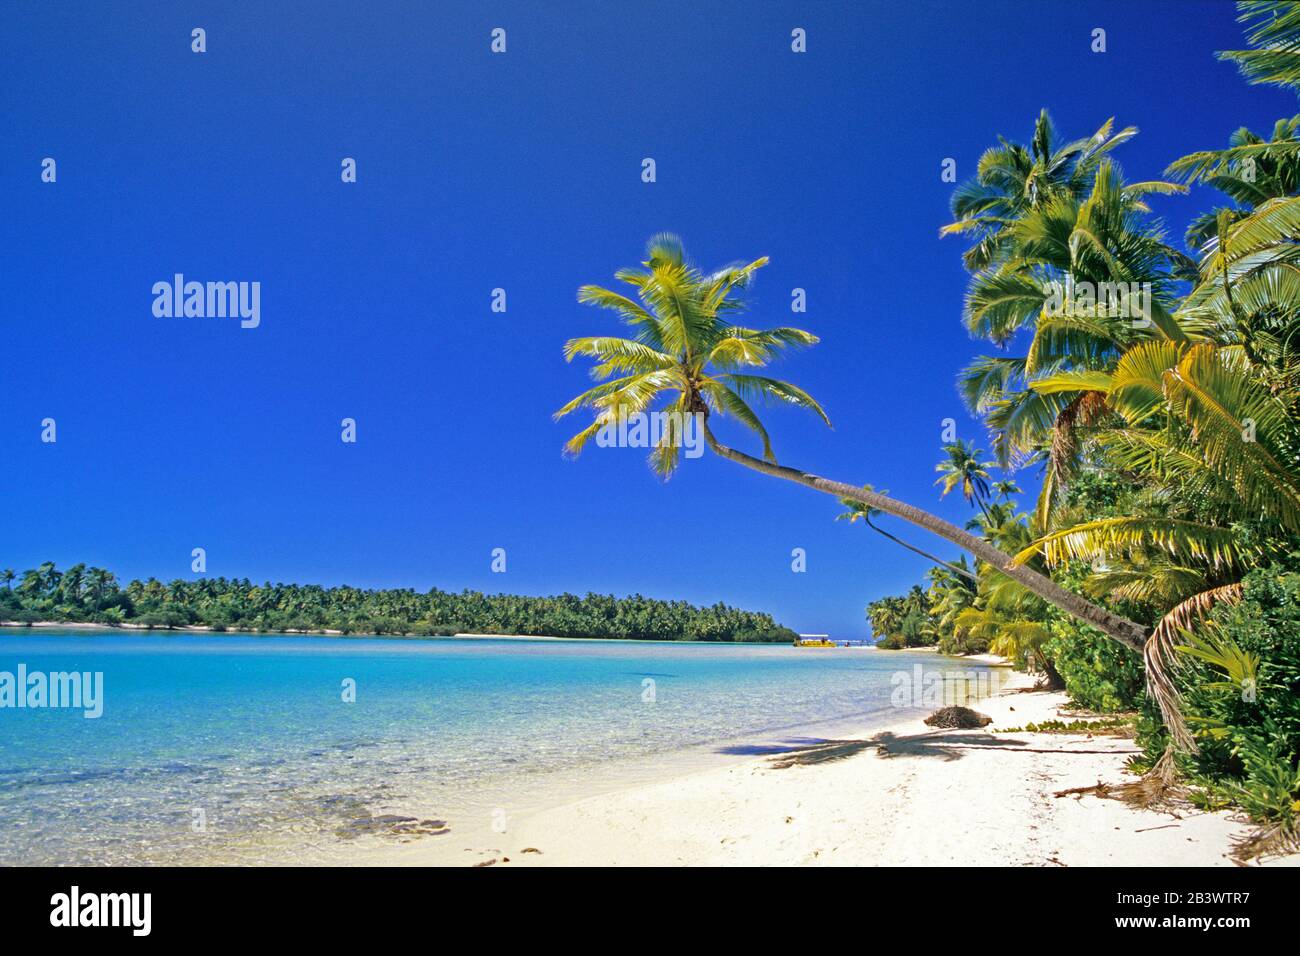 Islas Cook, Traumstrand, Palmenstruand, Aitutaki Foto de stock